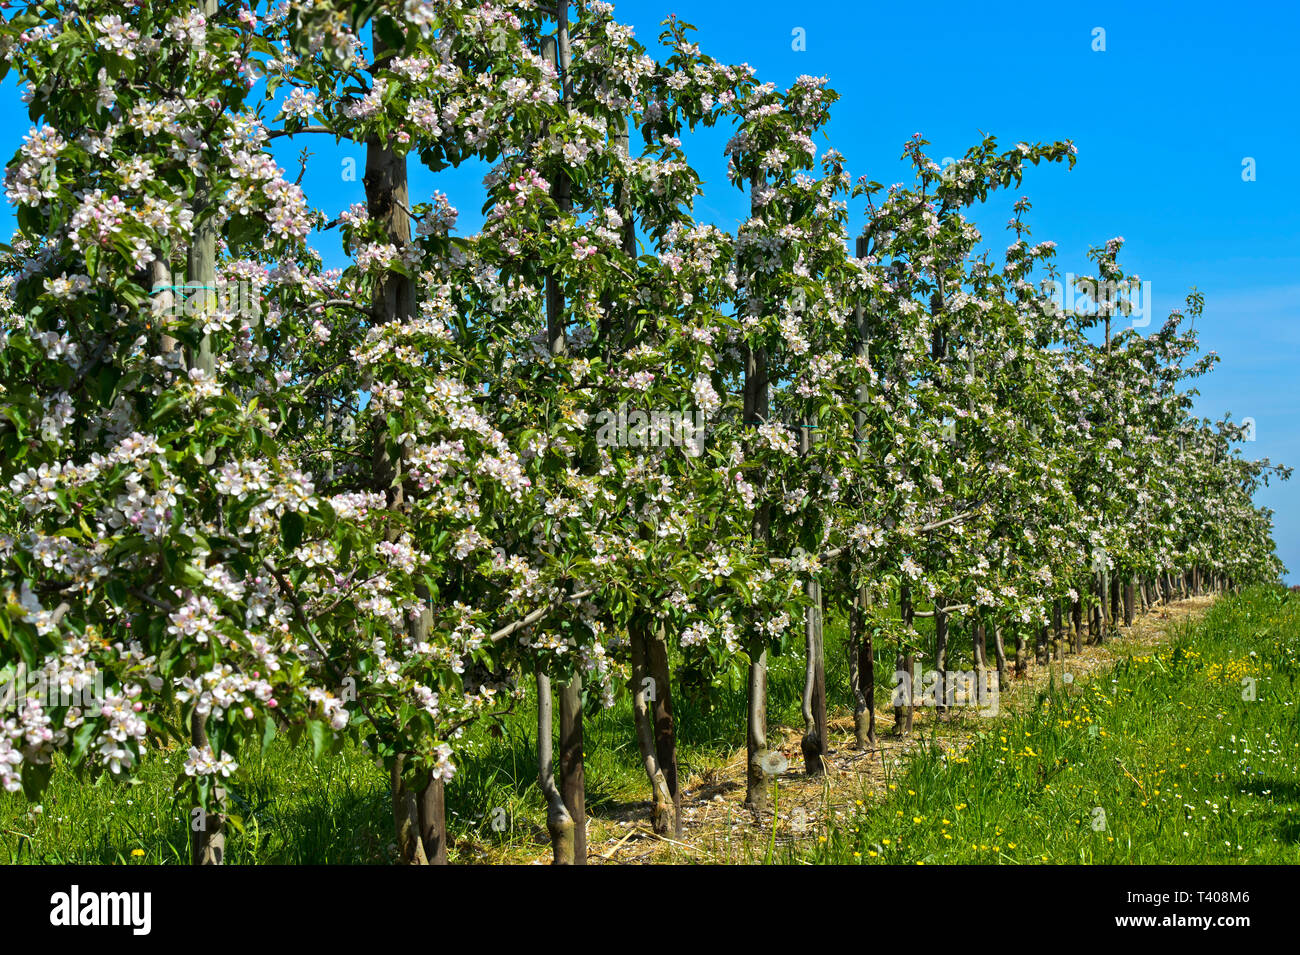 Blühende Apfelbäume im Halb-standard Baum Anbau, Kanton Thurgau, Schweiz Stockfoto